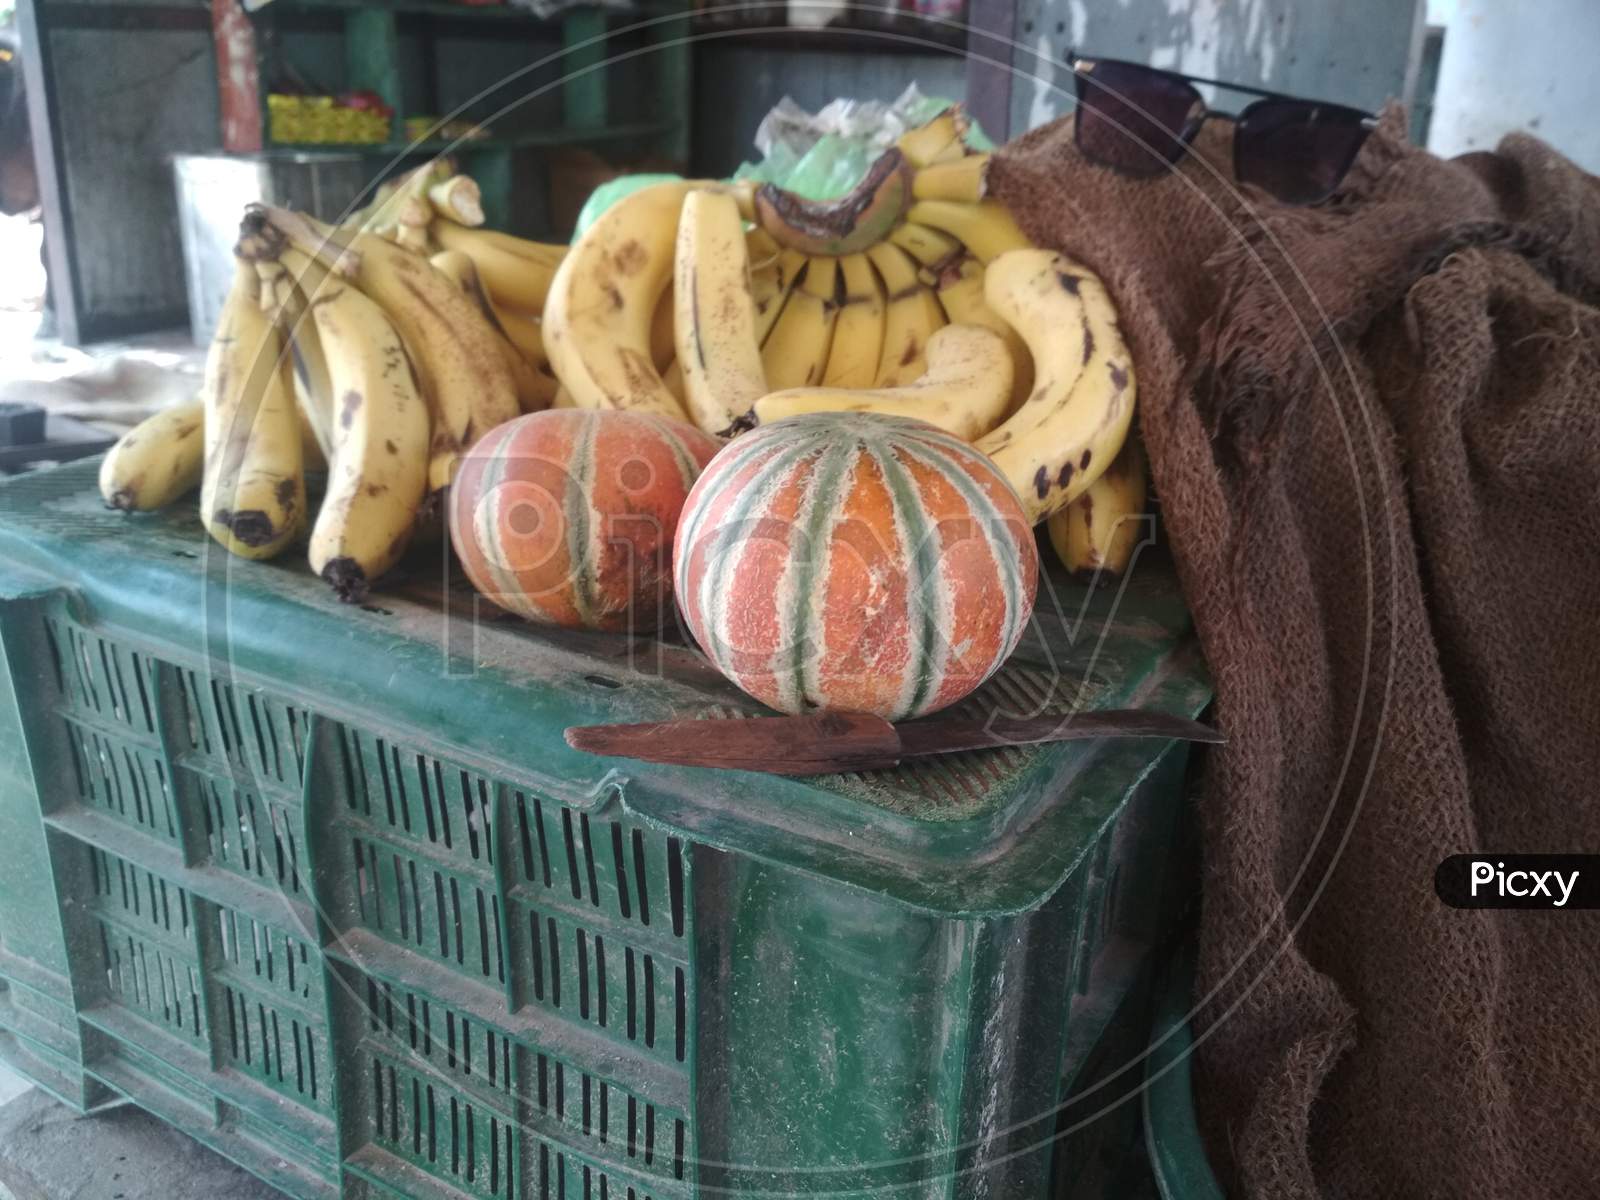 Fruits shop